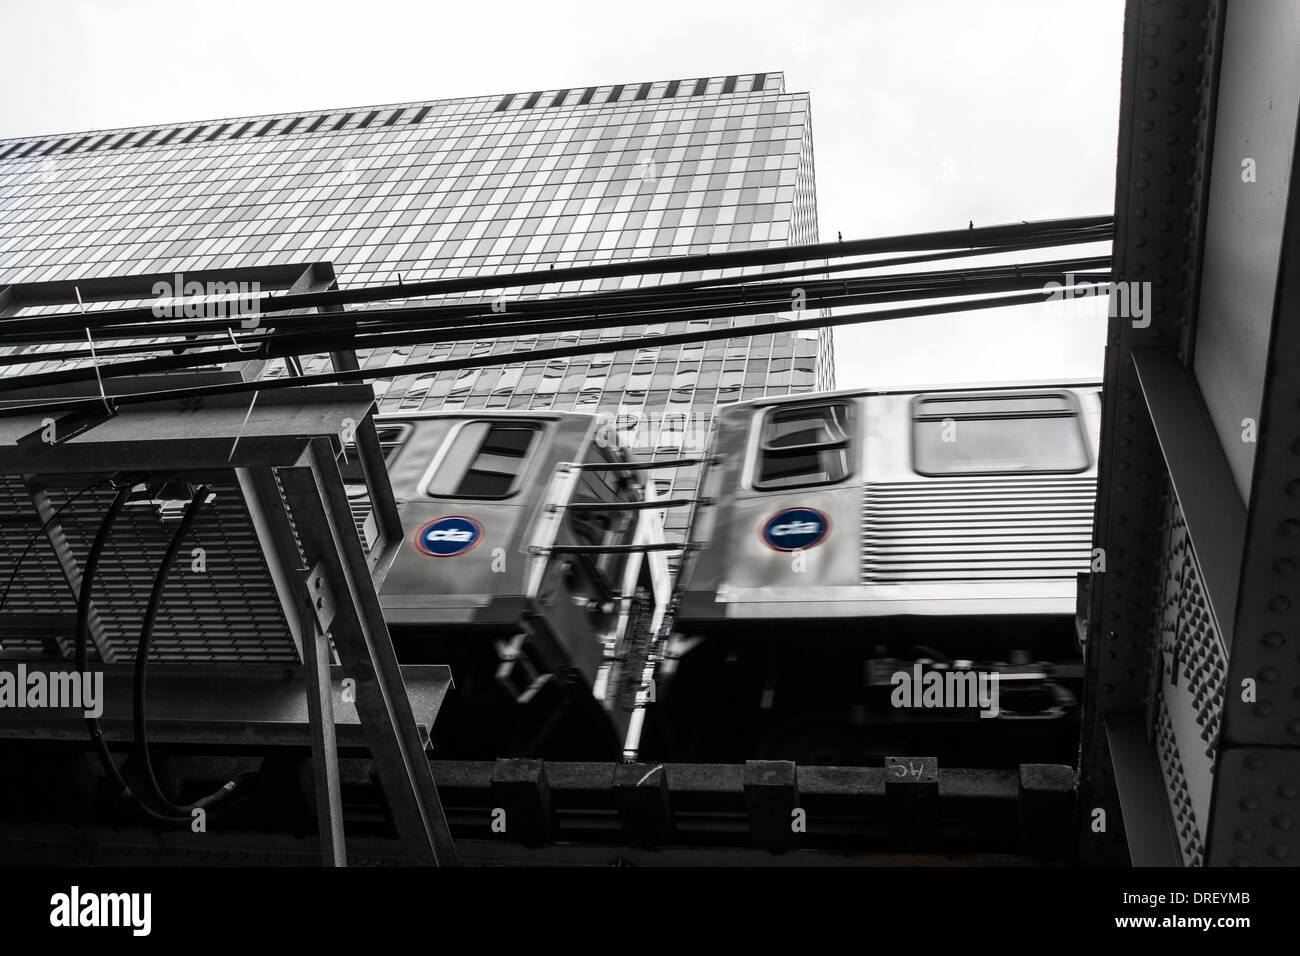 cta elevated subway train in Chicago USA Stock Photo